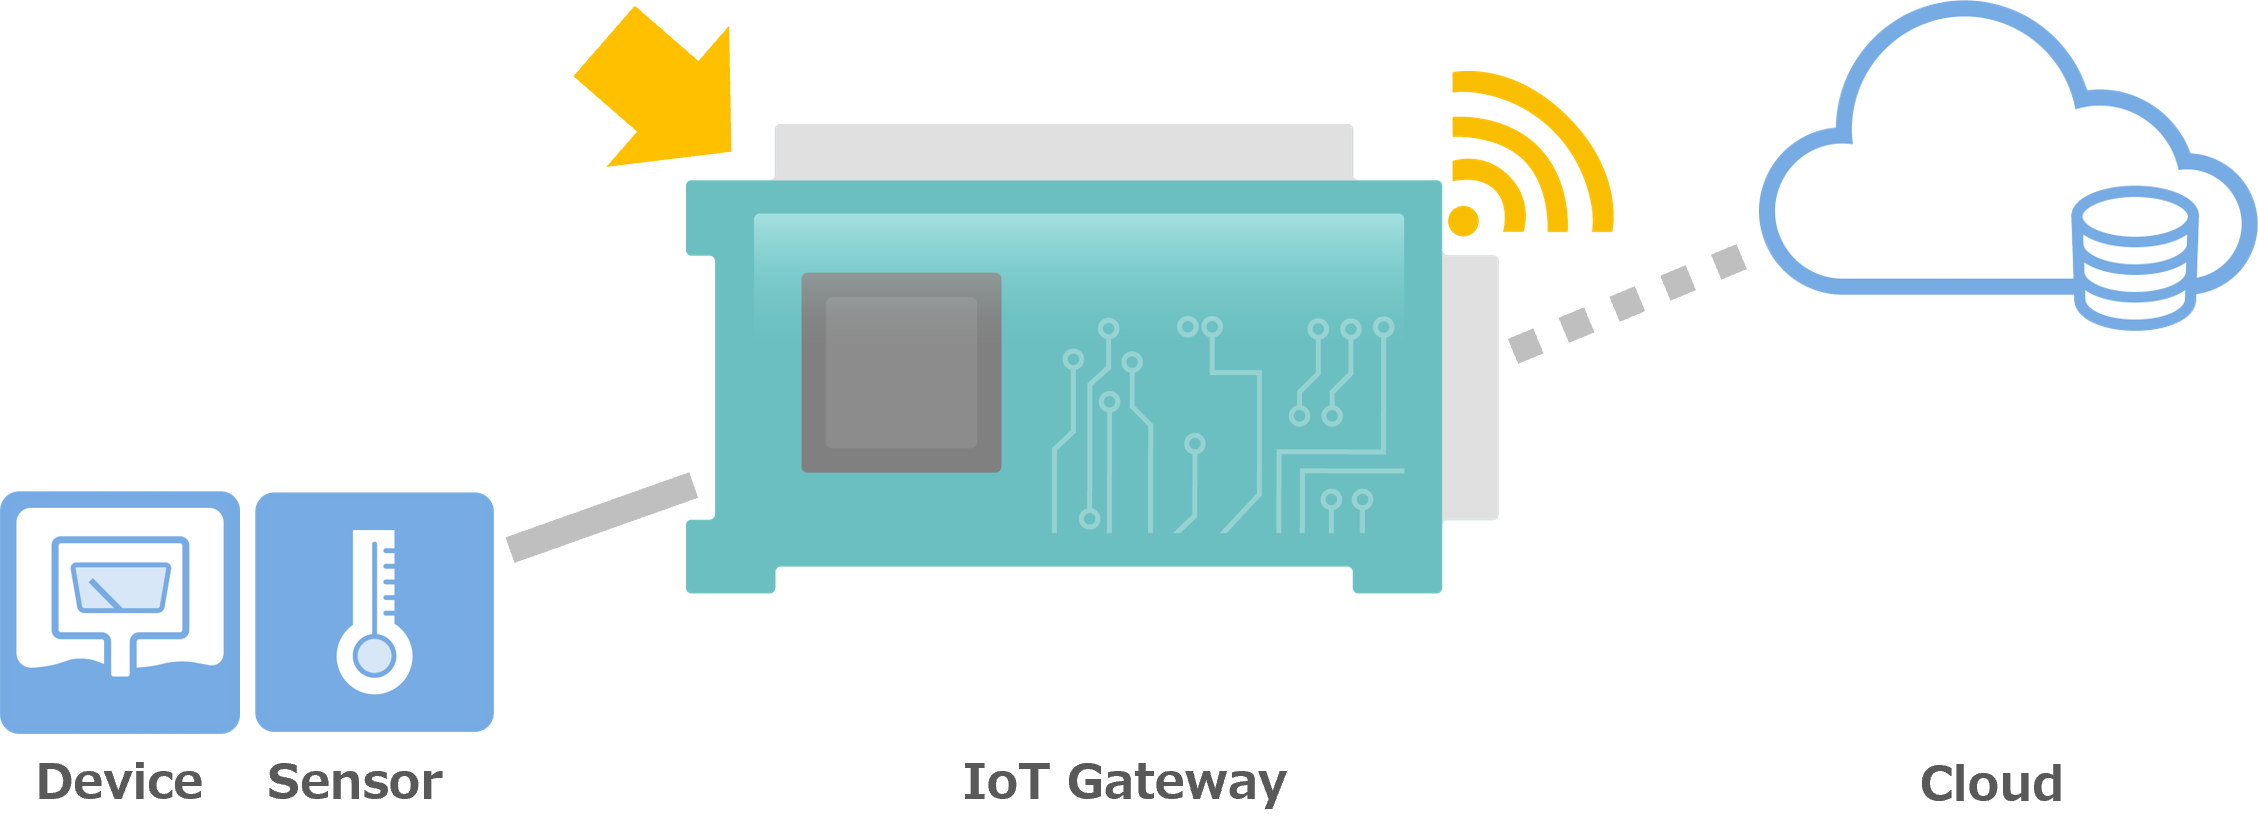 Device/Sensor→IoT Gateway→Cloud